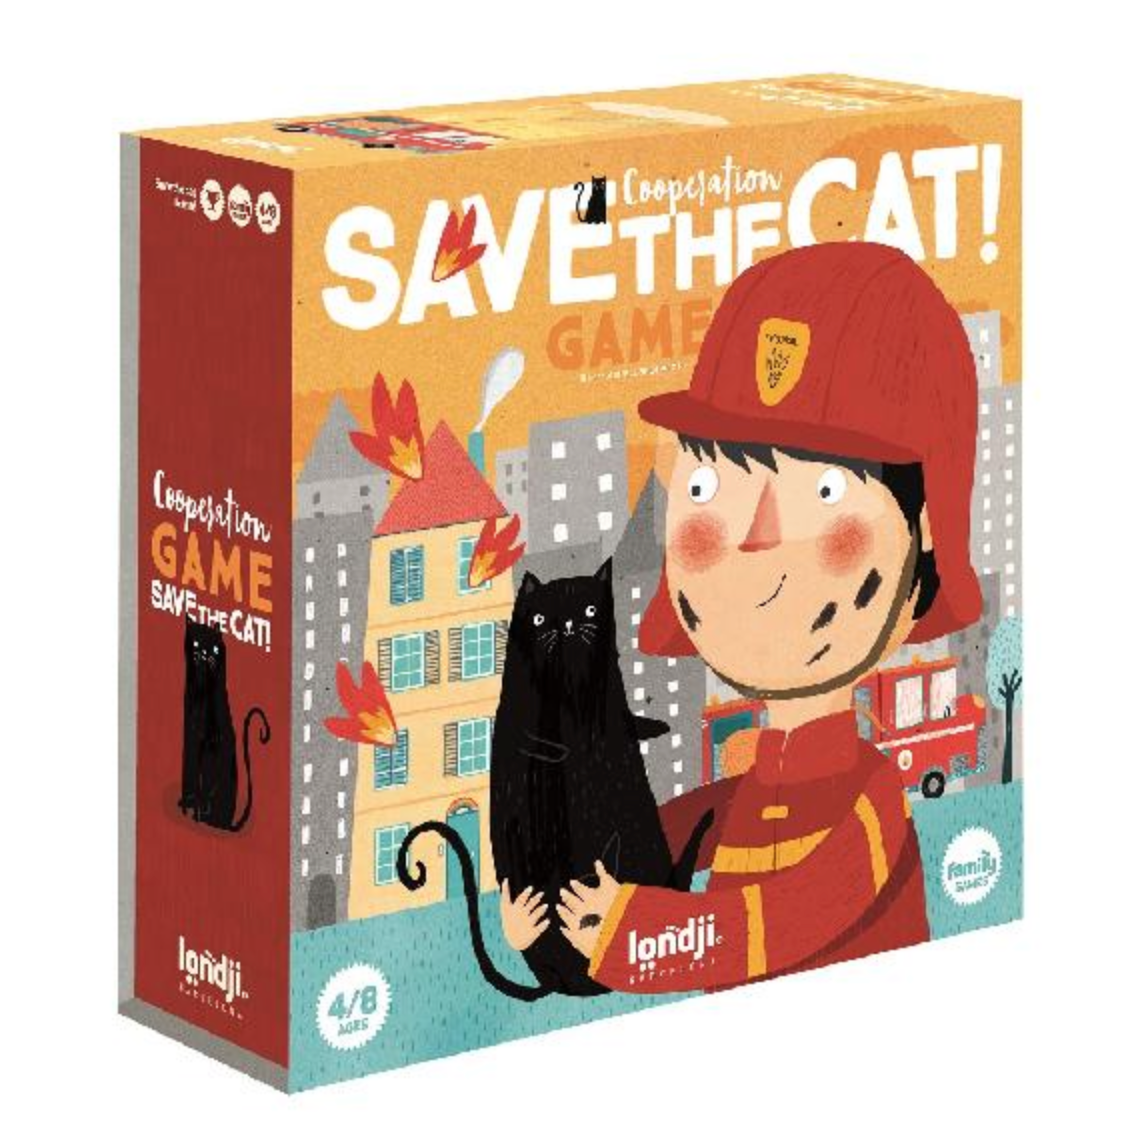 LONDJI Game - Save the Cat